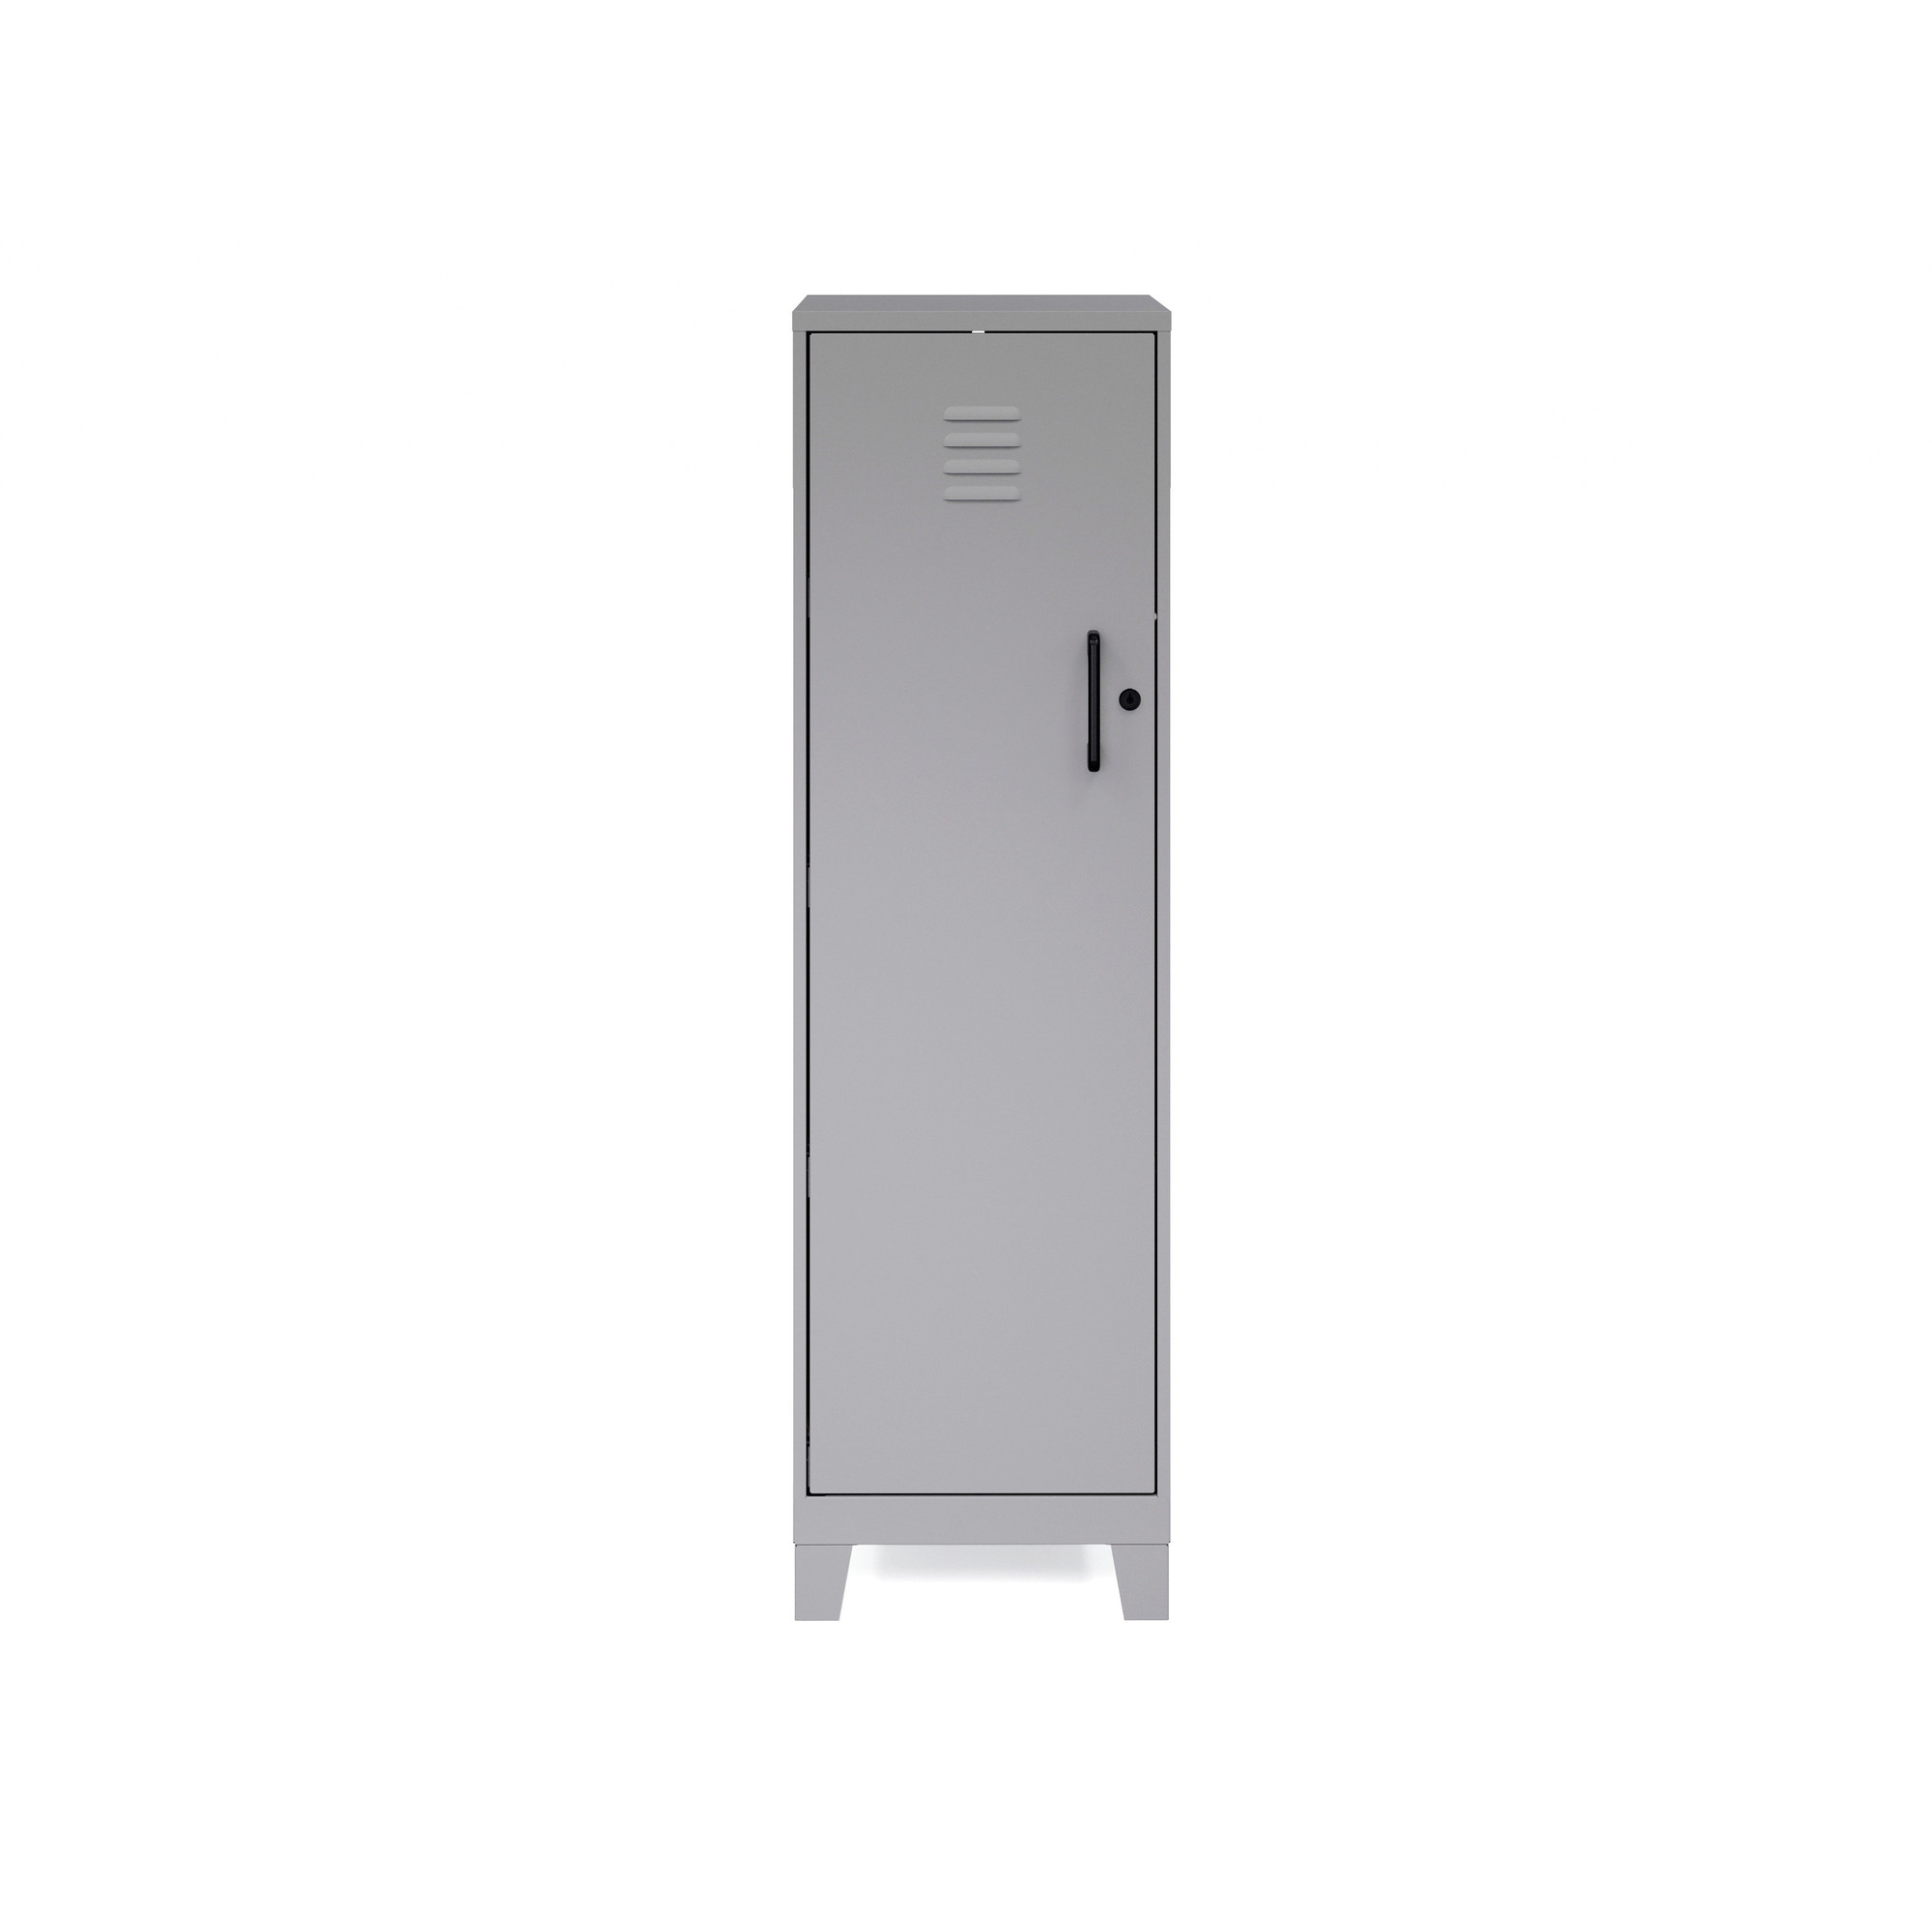 Hirsh Industries, 4 Shelf Storage Locker Cabinet, Height 49.38 in, Width 14.25 in, Color Silver, Model 25227